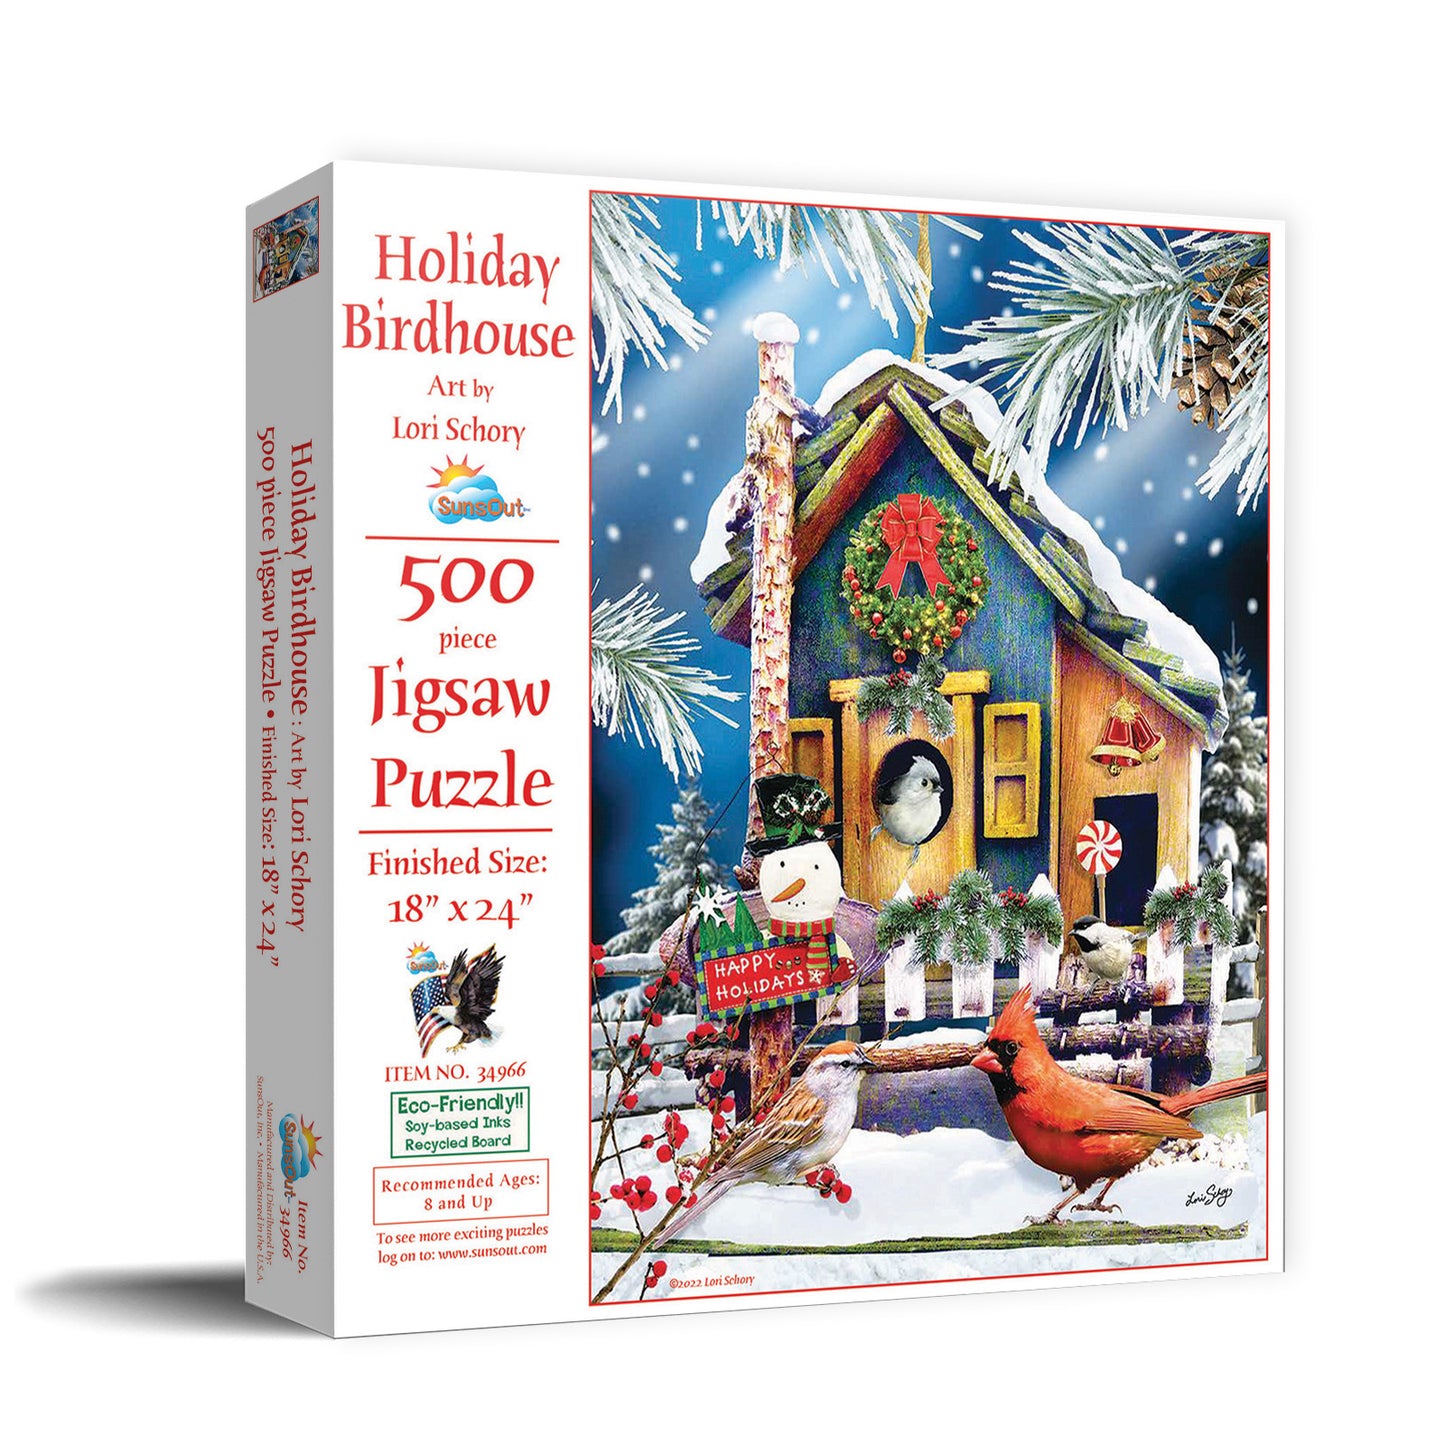 Holiday Birdhouse - 500 Piece Jigsaw Puzzle